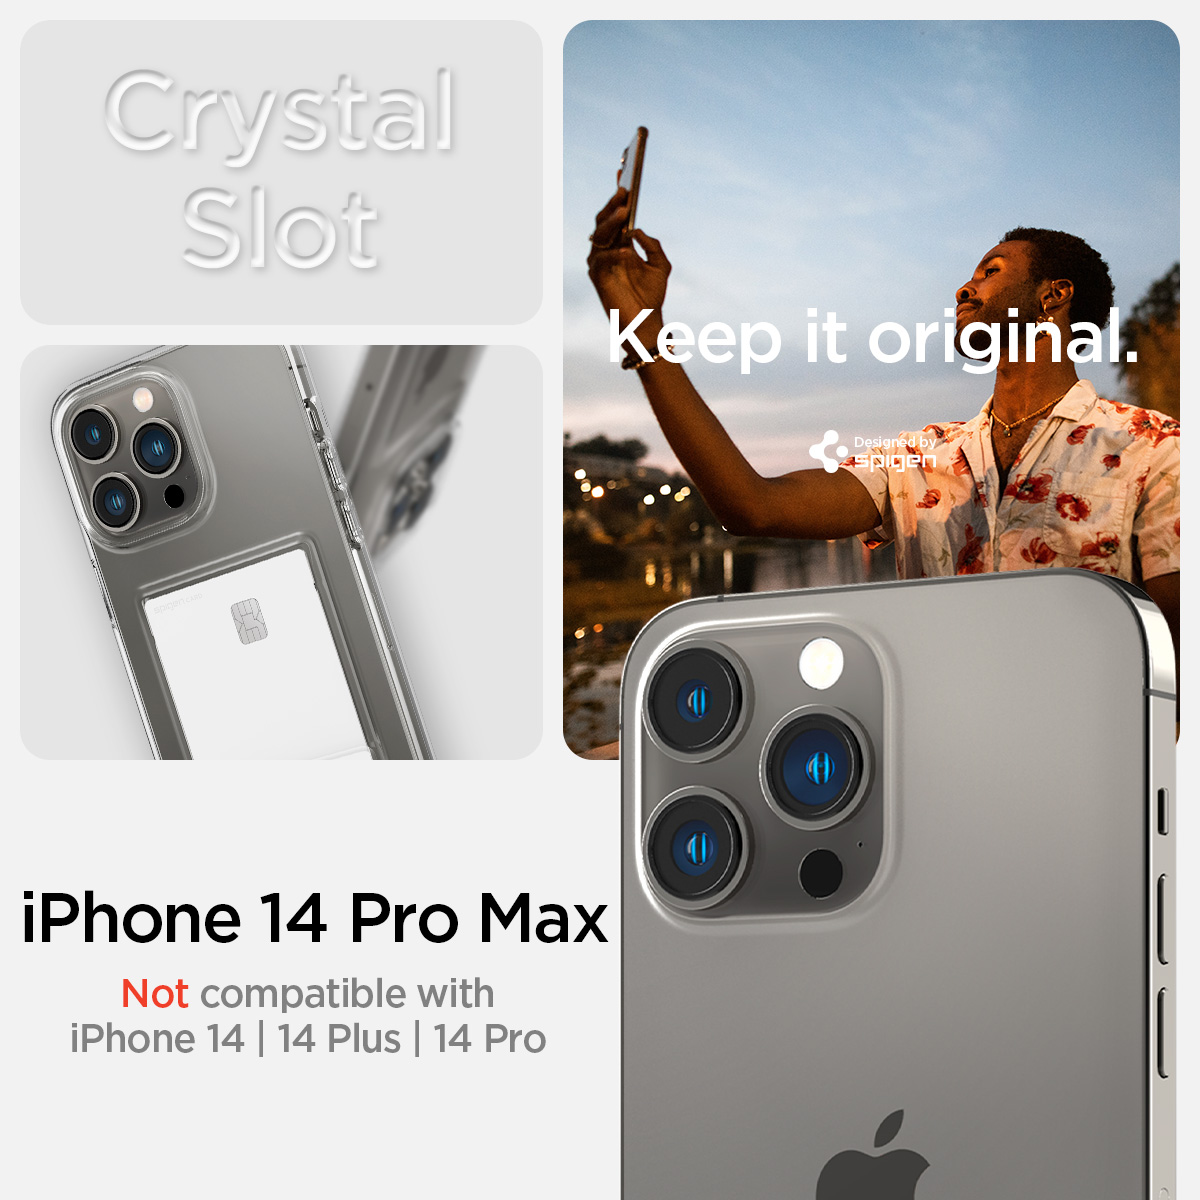 id_iphone14promax_crystal_slot_01